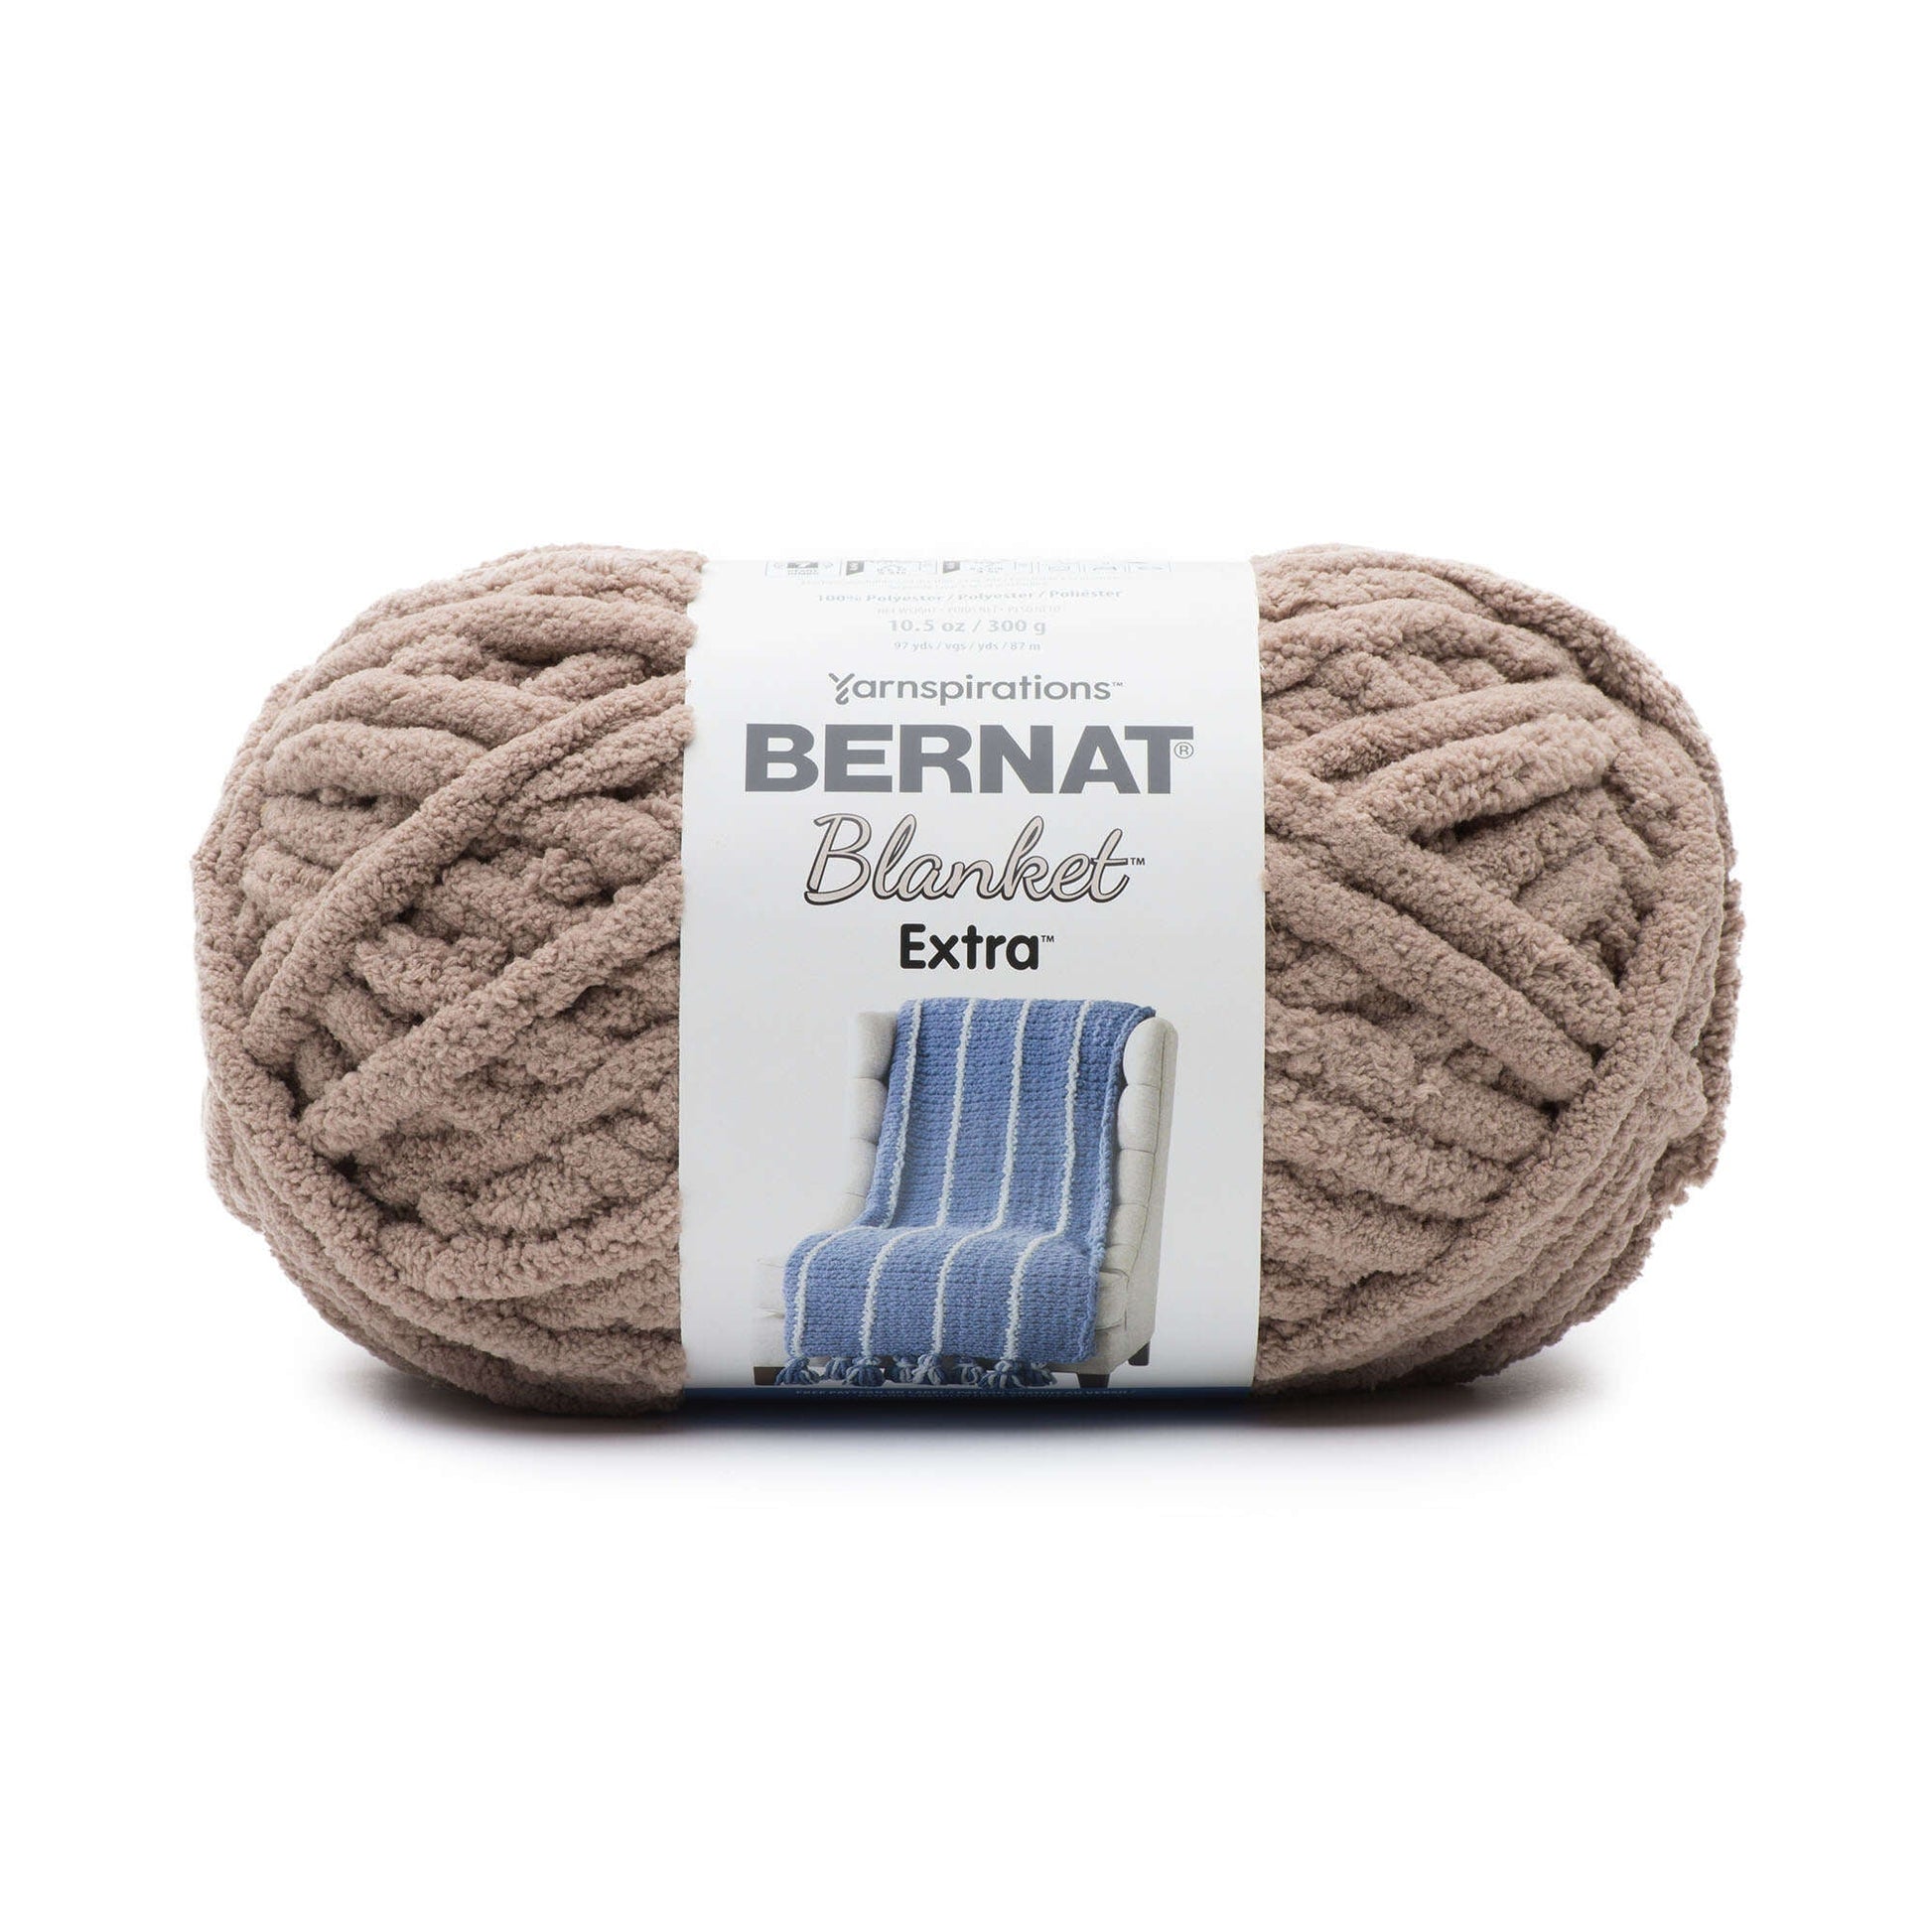 Bernat Blanket Extra Yarn (300g/10.5oz) - Clearance Shades* Mushroom